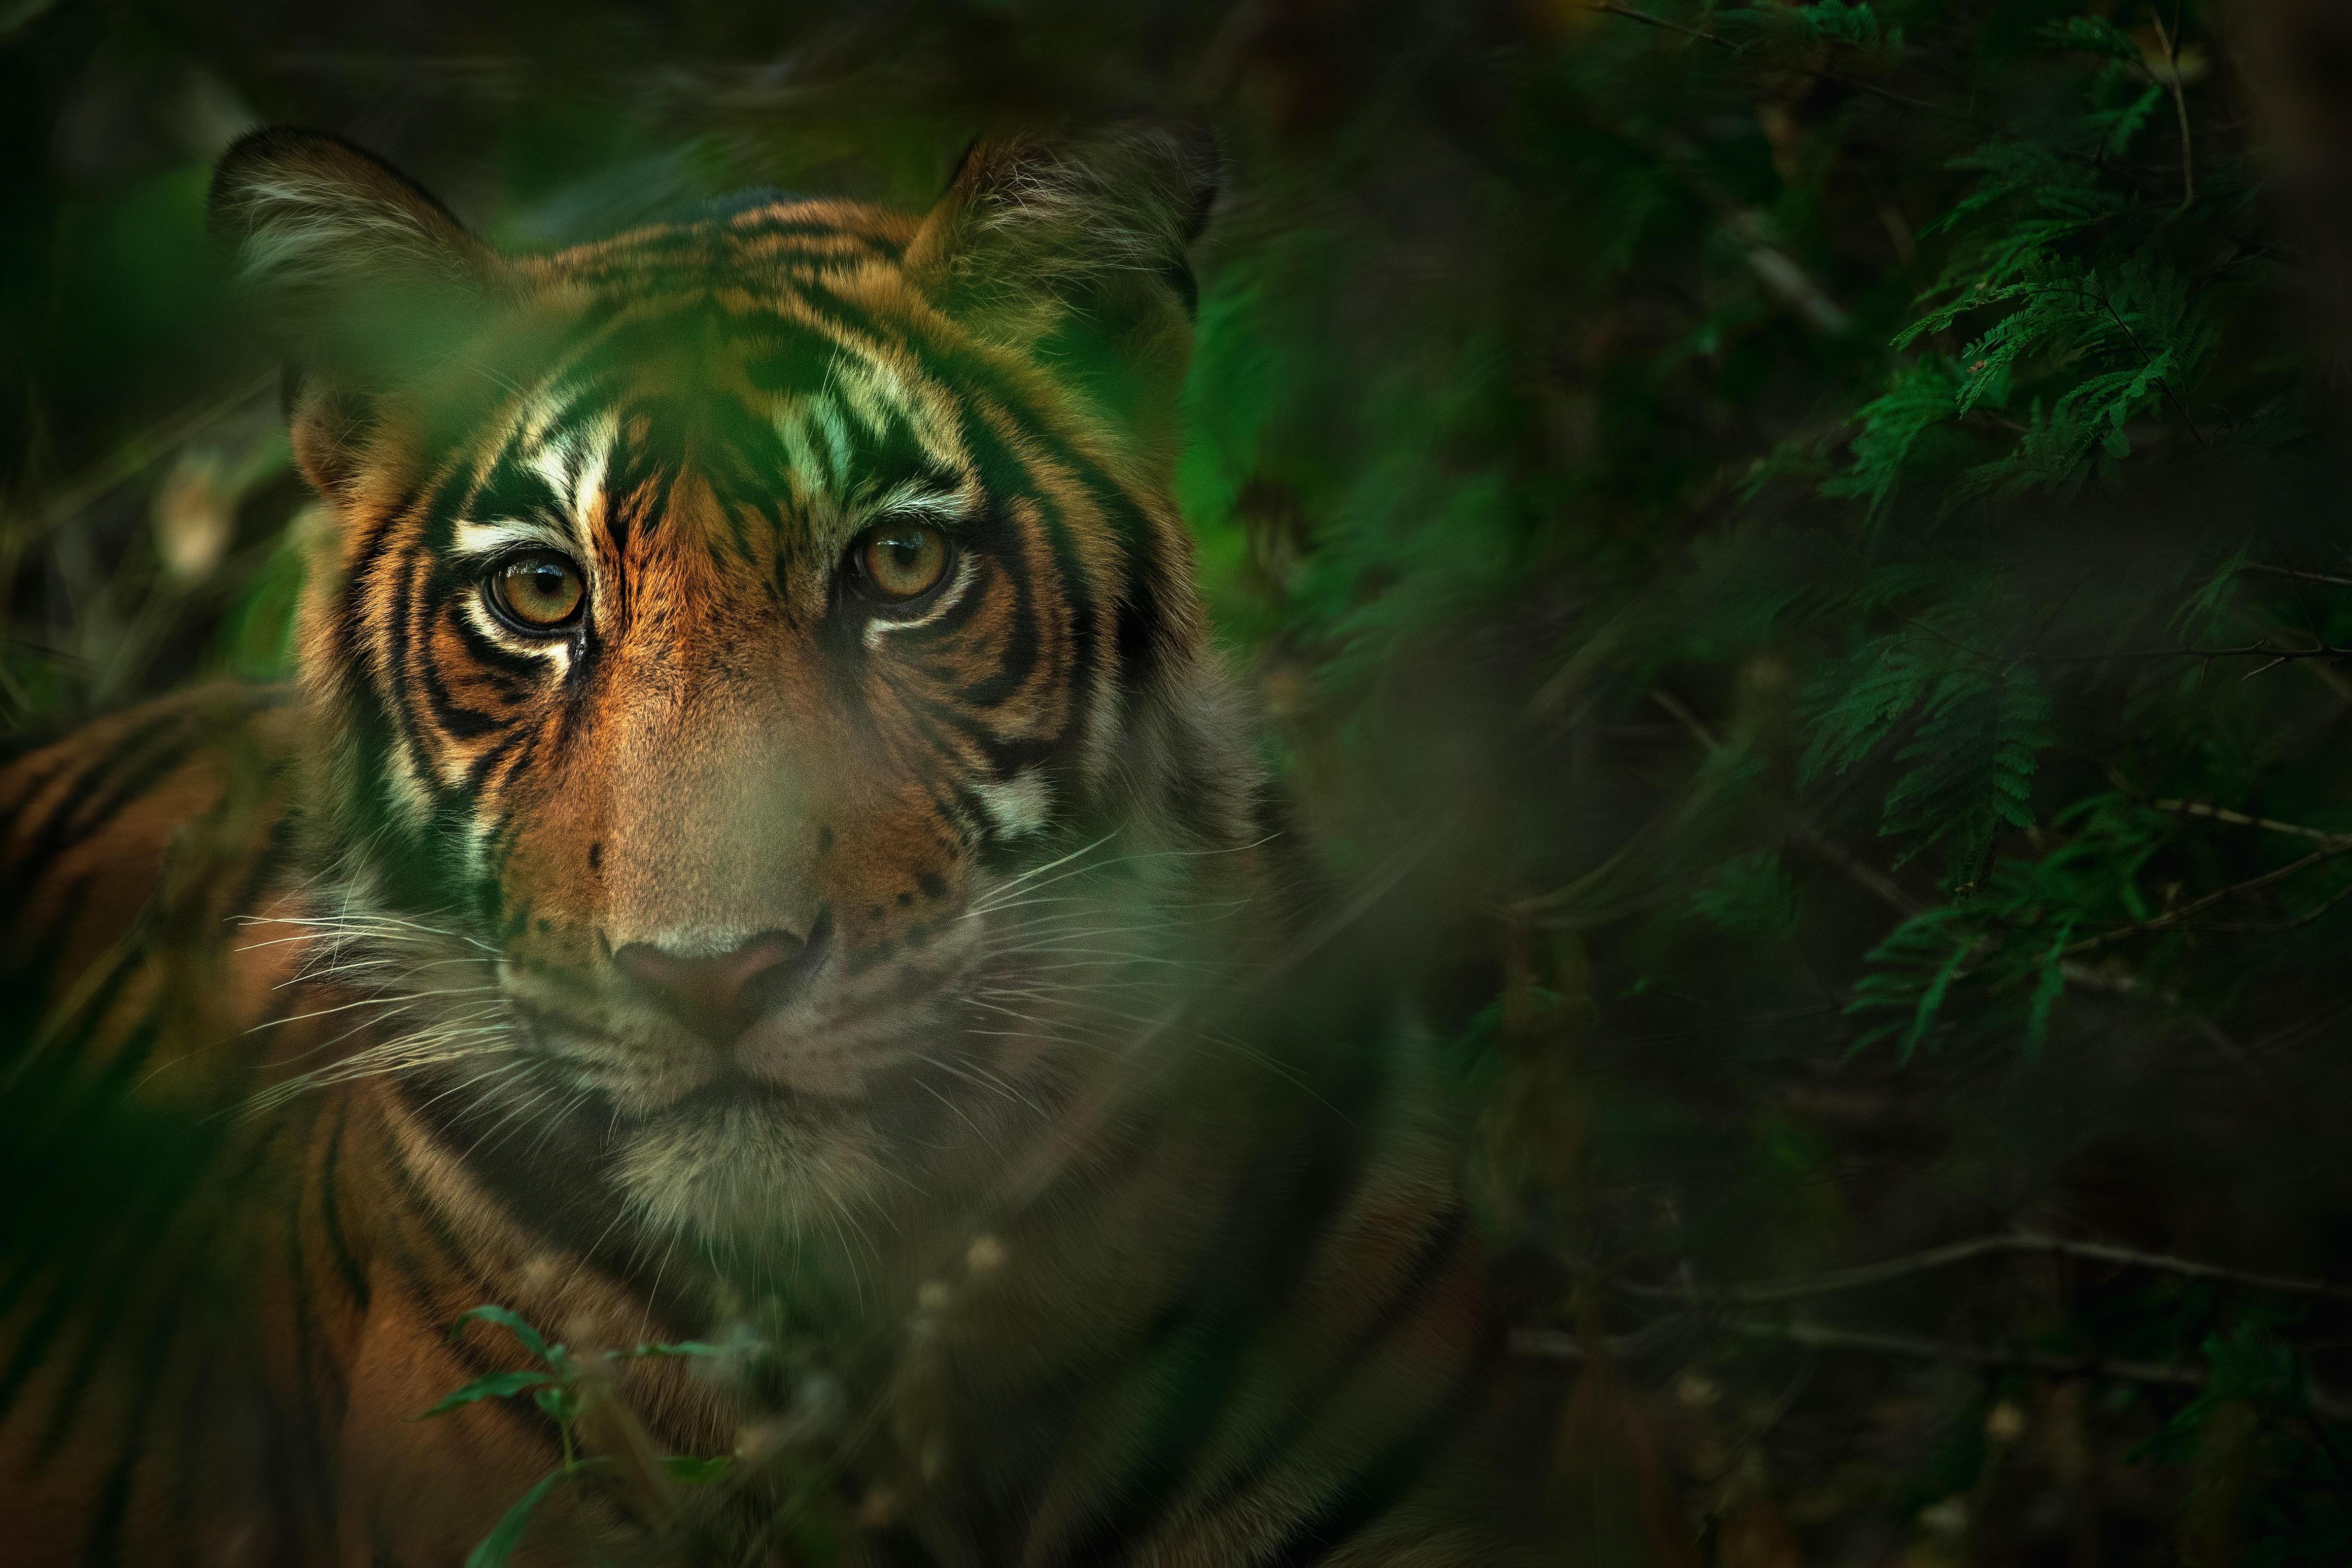 UN award for Nepal’s tiger range restoration spurs euphoria amid challenges